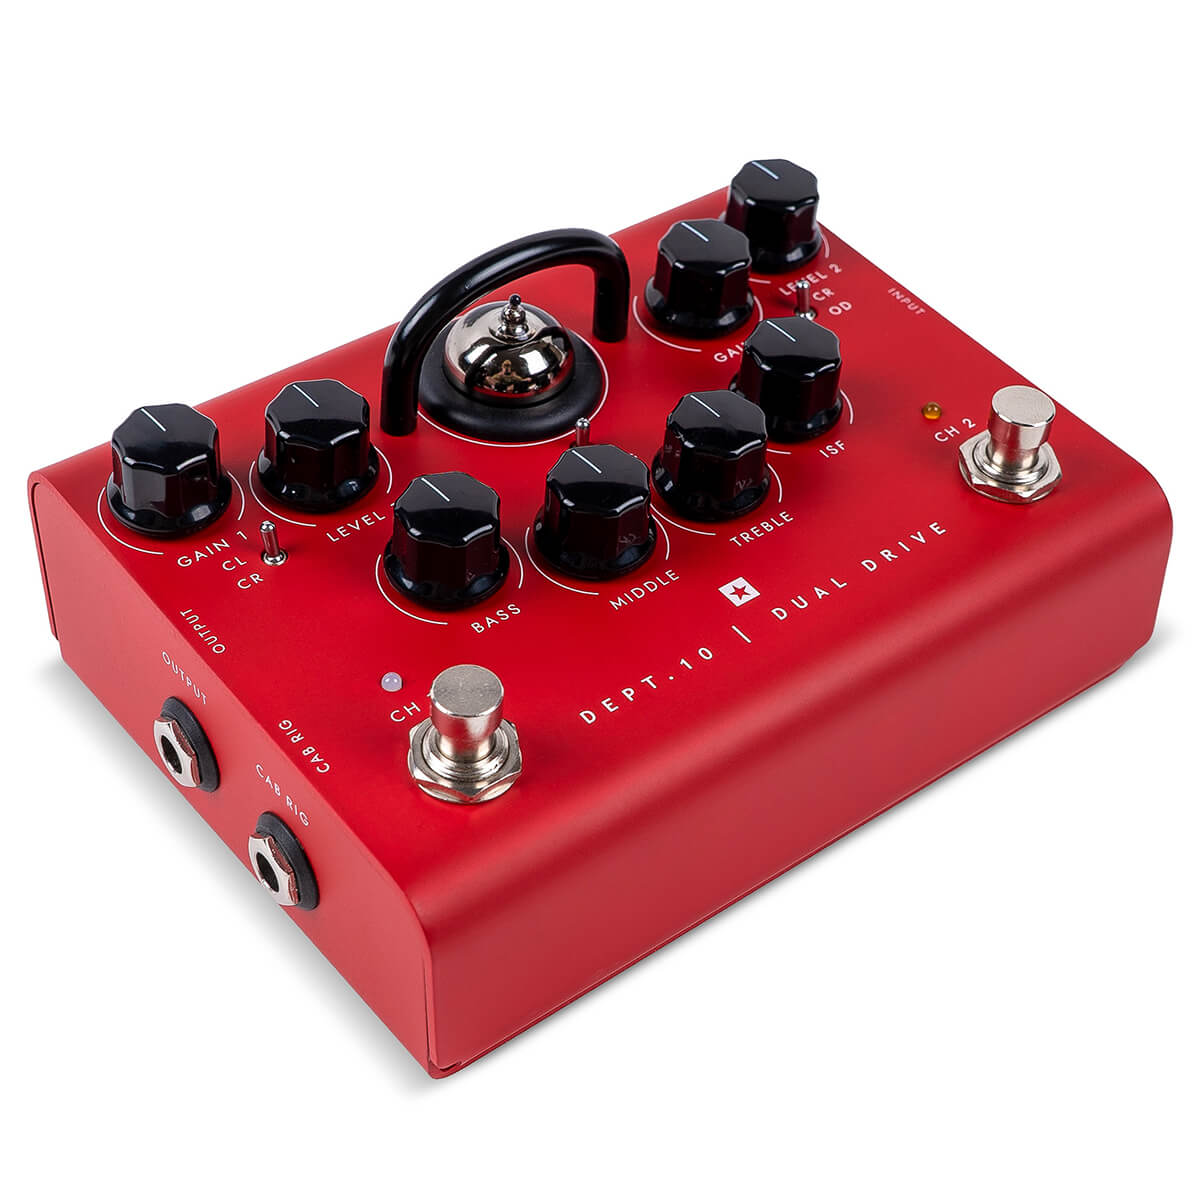 Blackstar Dept 10 Dual Drive guitar pedal in bold red